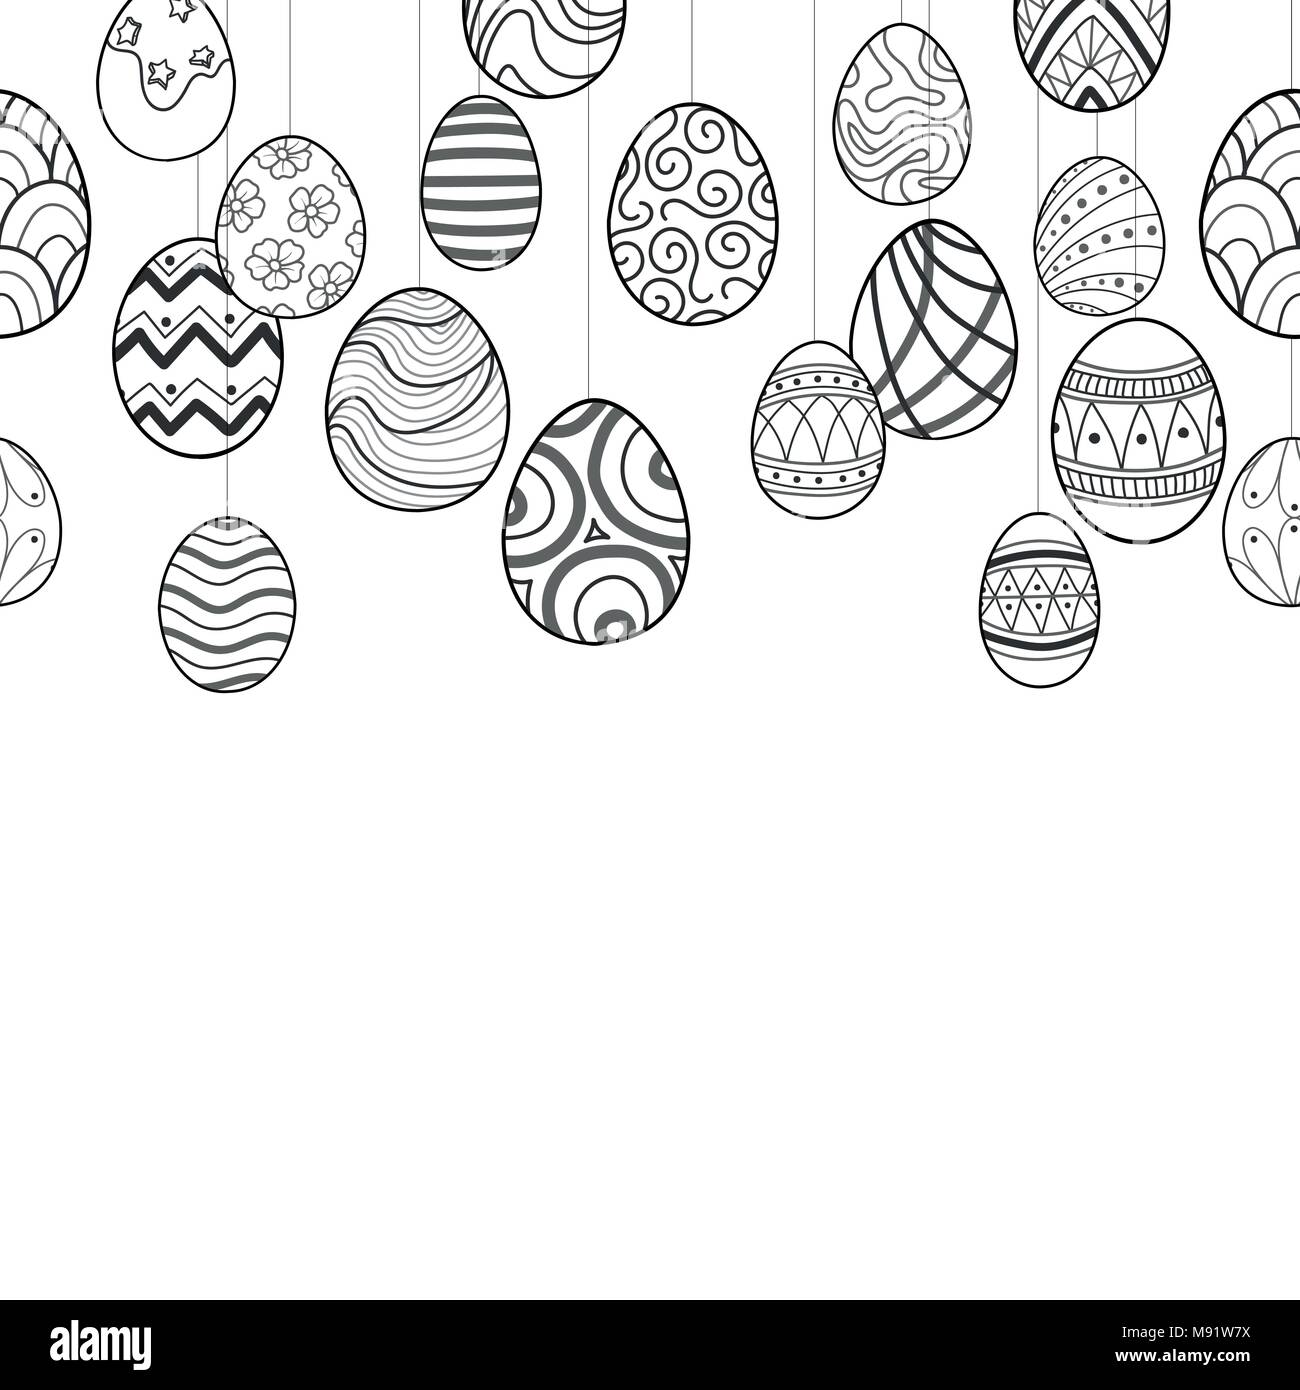 Easter eggs in black outline hang on white background. Cute hand drawn seamless pattern design for Easter festival in vector illustration. Stock Vector